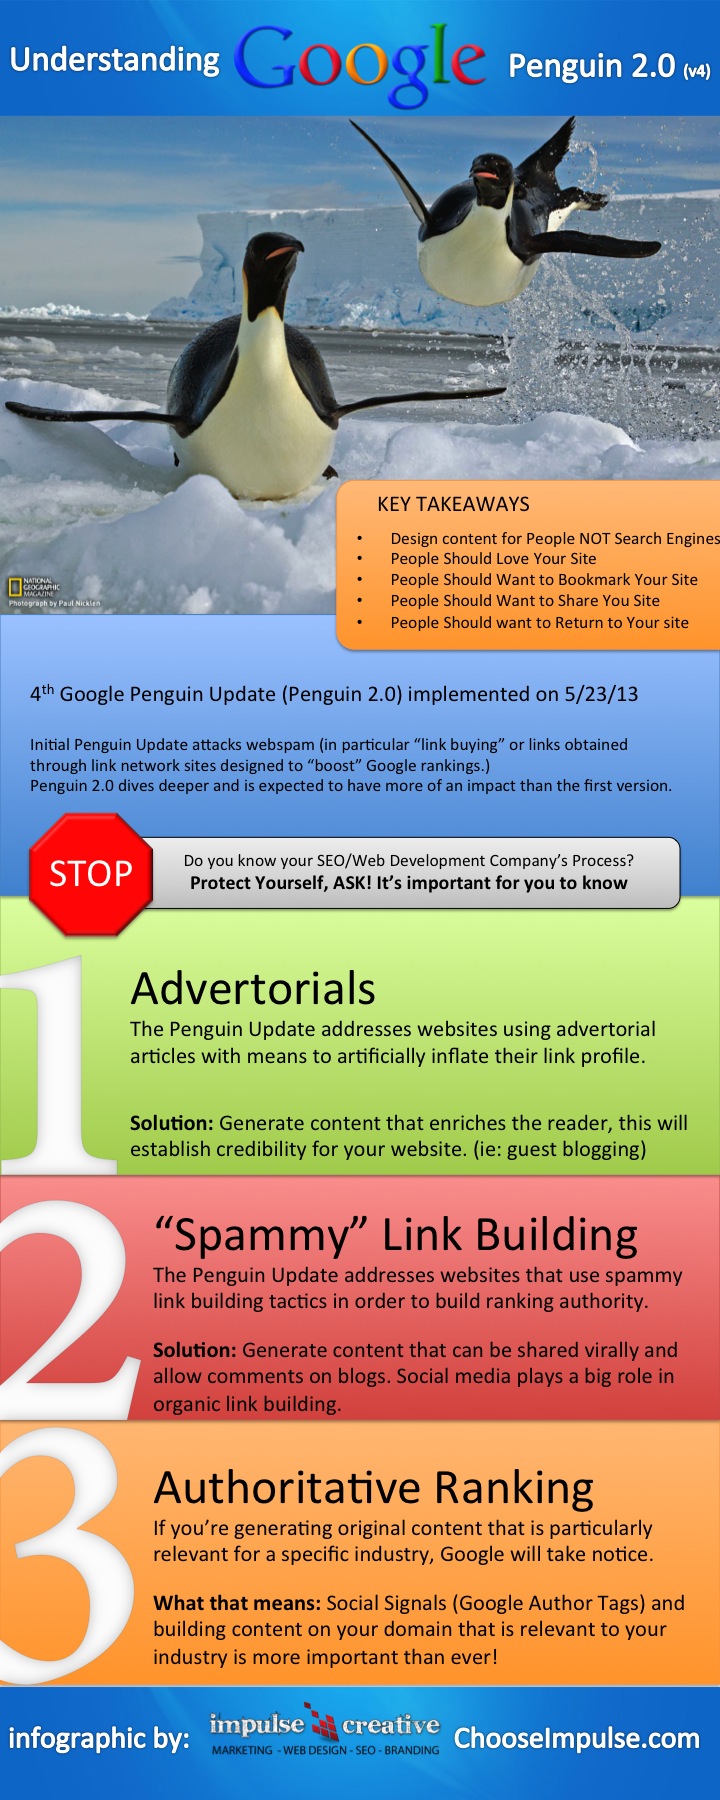 Google-Penguin-Update-Infographic.jpg